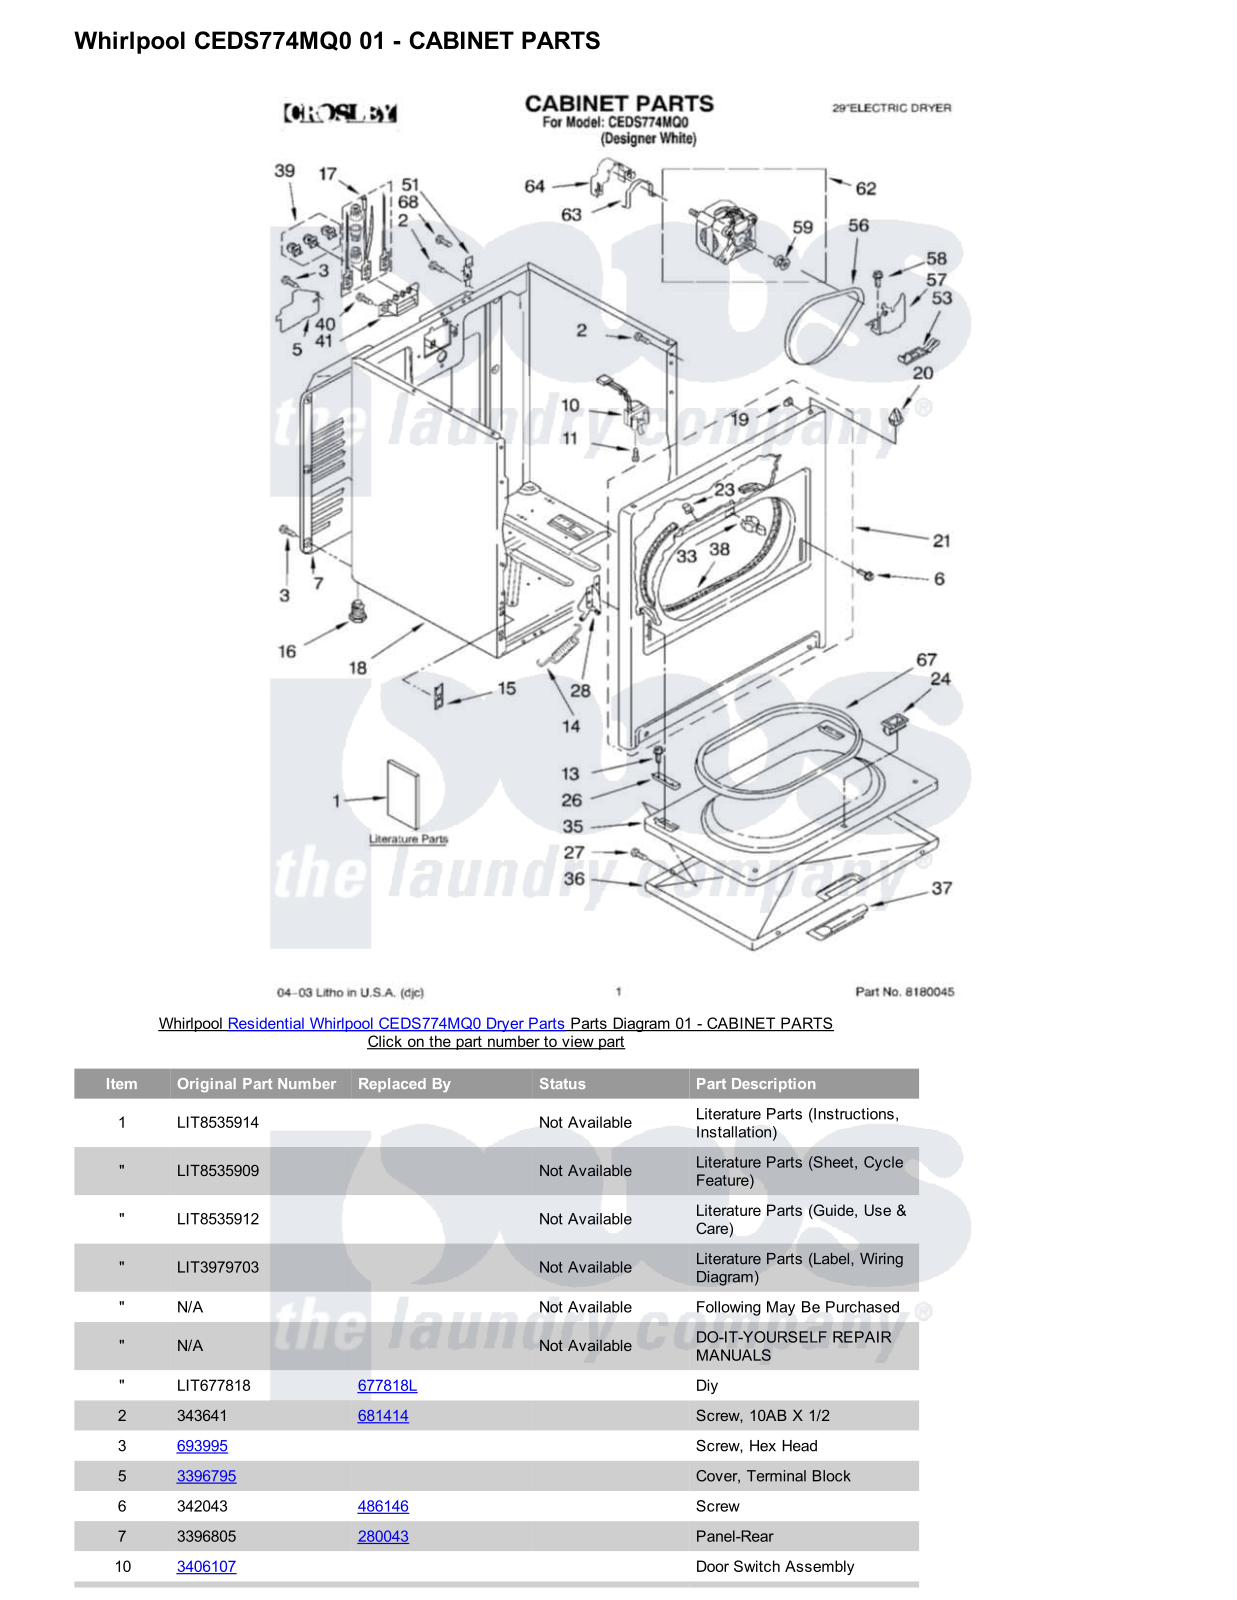 Whirlpool CEDS774MQ0 Parts Diagram